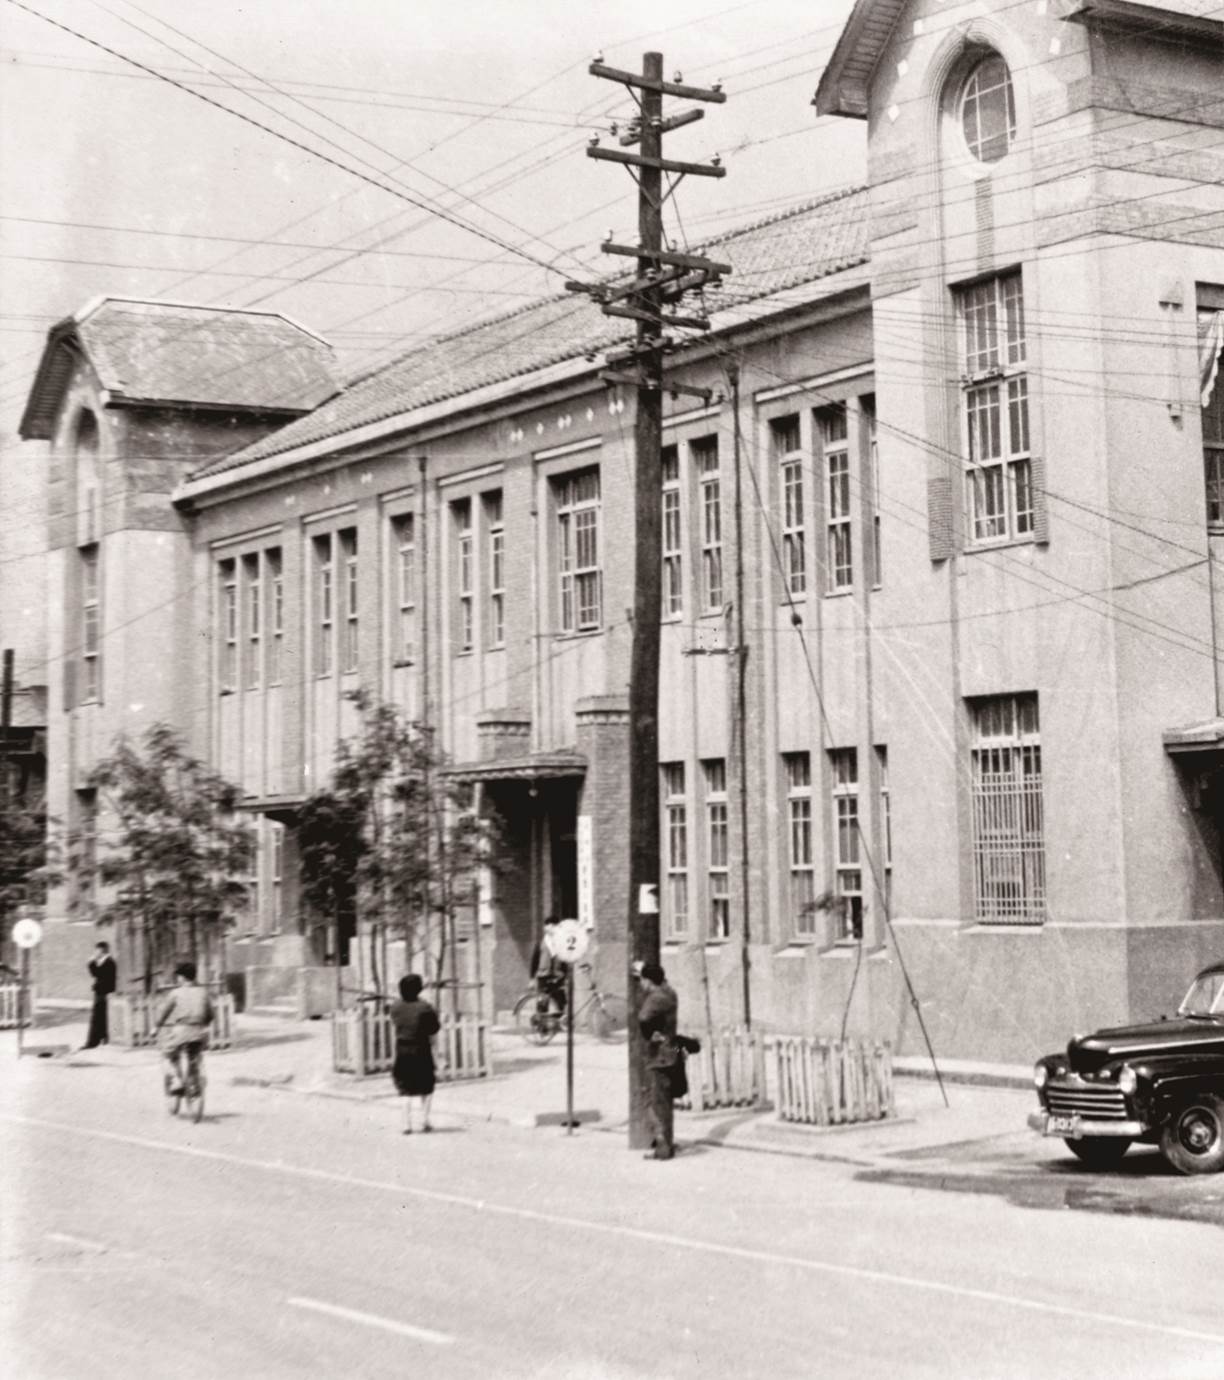 The Old Bureau of Health Building, 1946